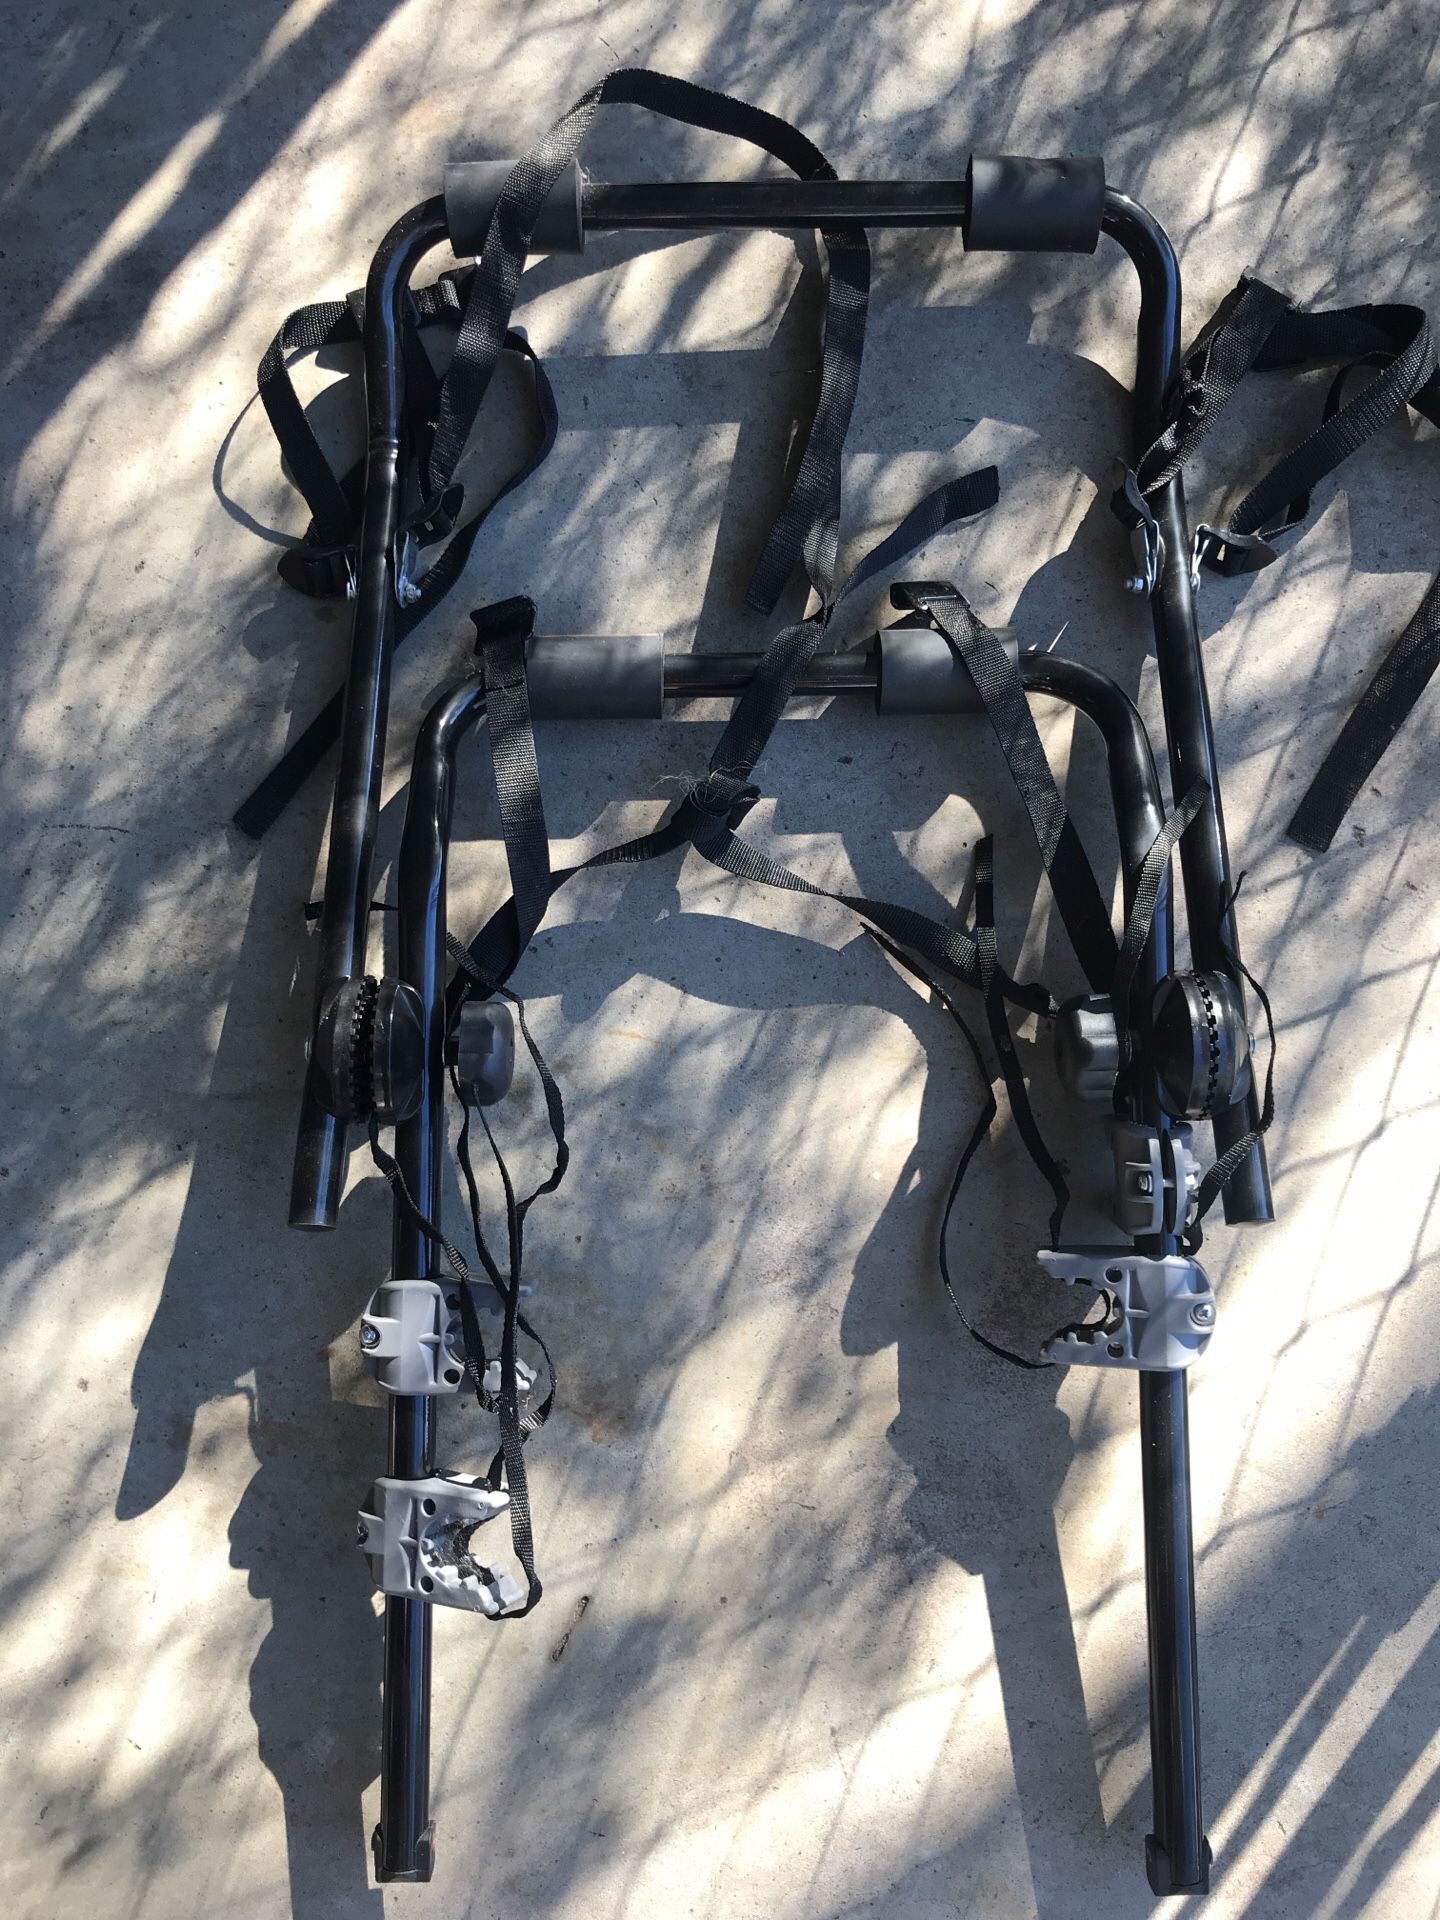 Bike rack- originally $40